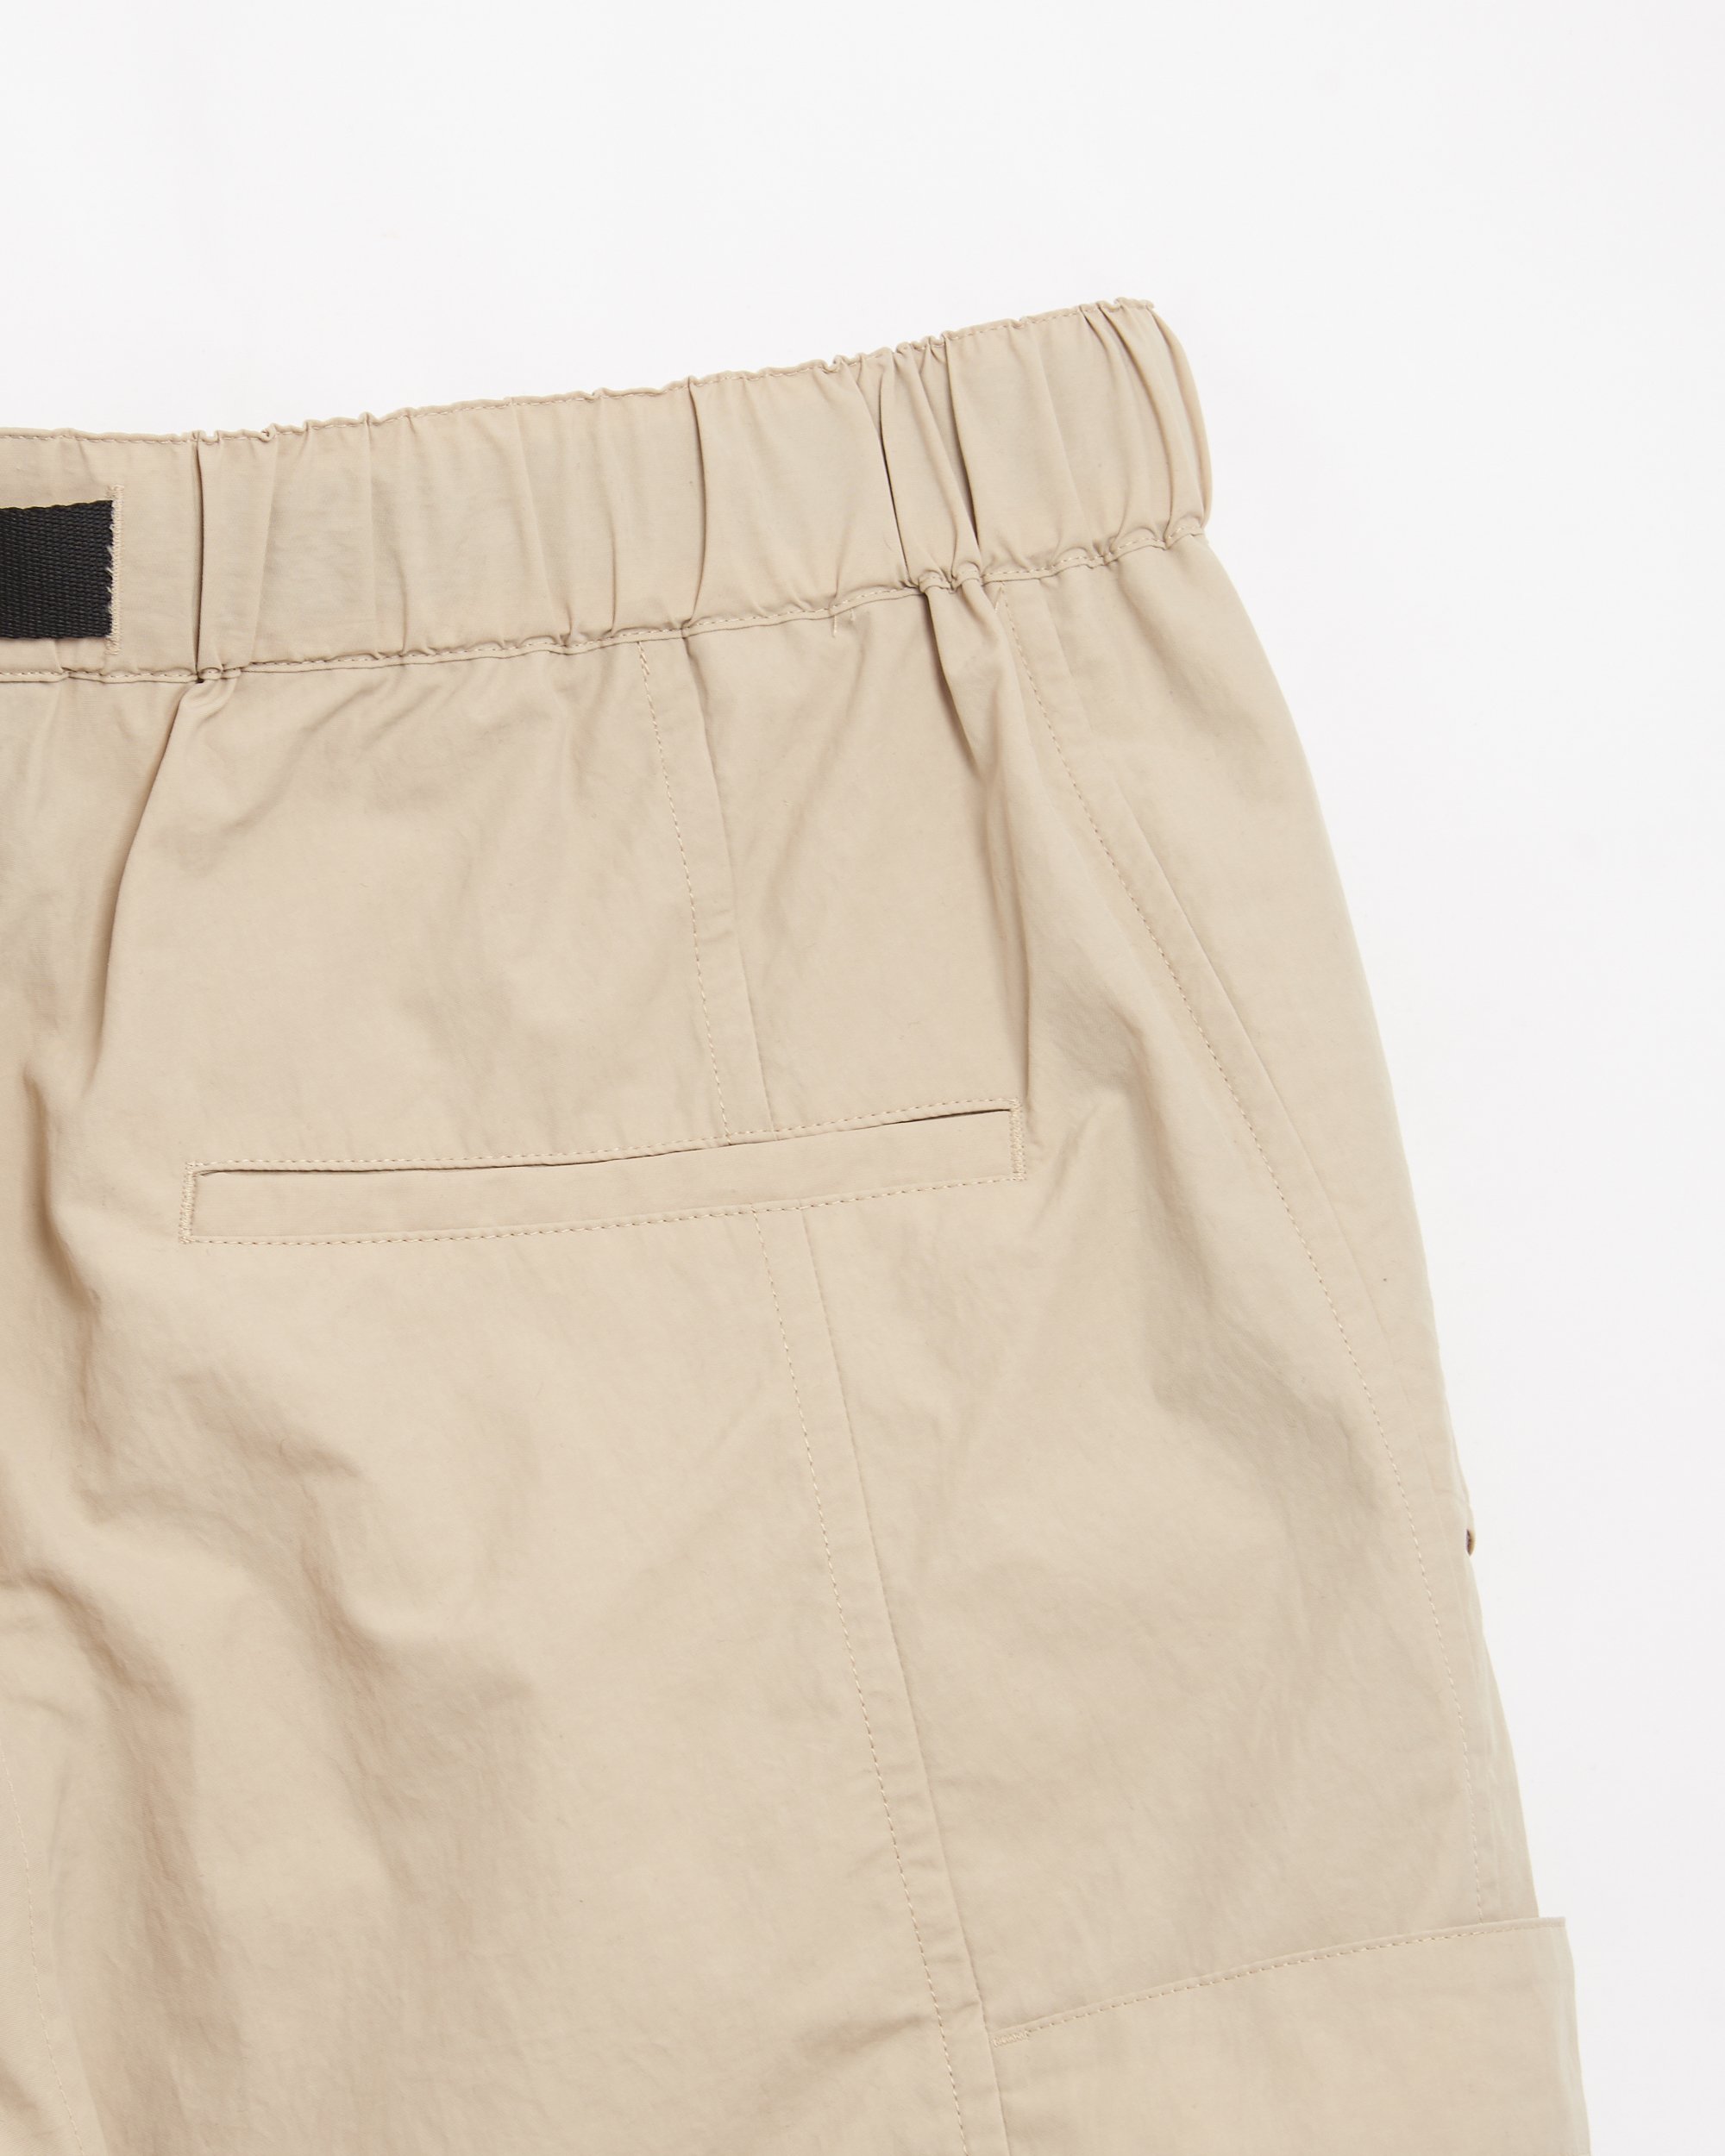 adidas Y-3 Crinkle Nylon Pants - Brown, Men's Lifestyle